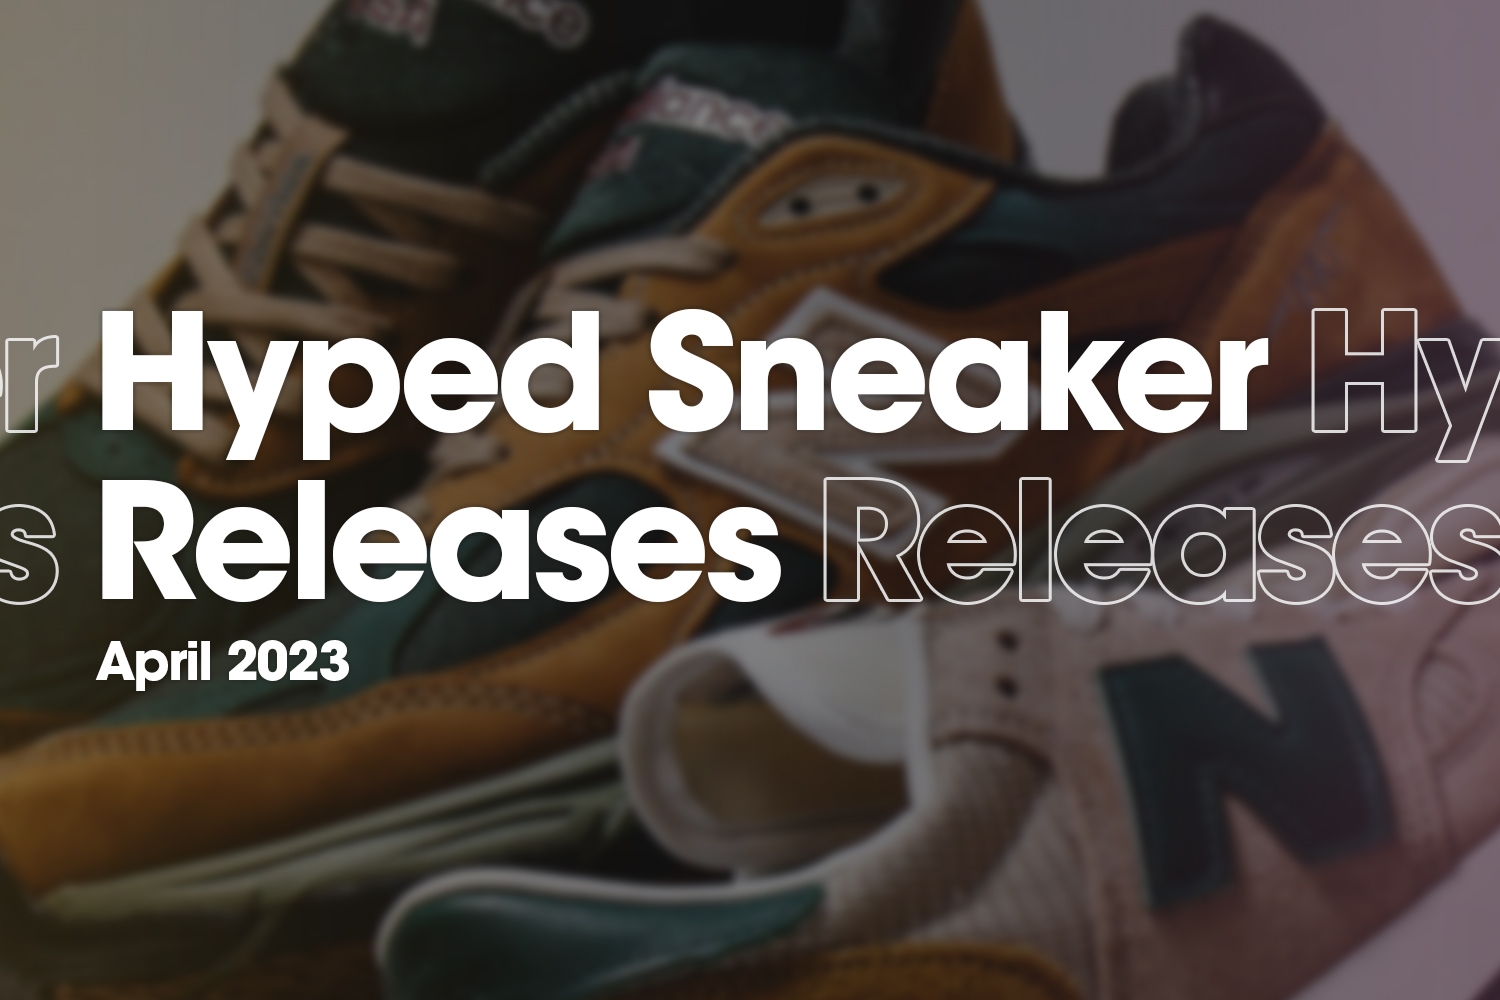 Hyped Sneaker Releases van april 2023